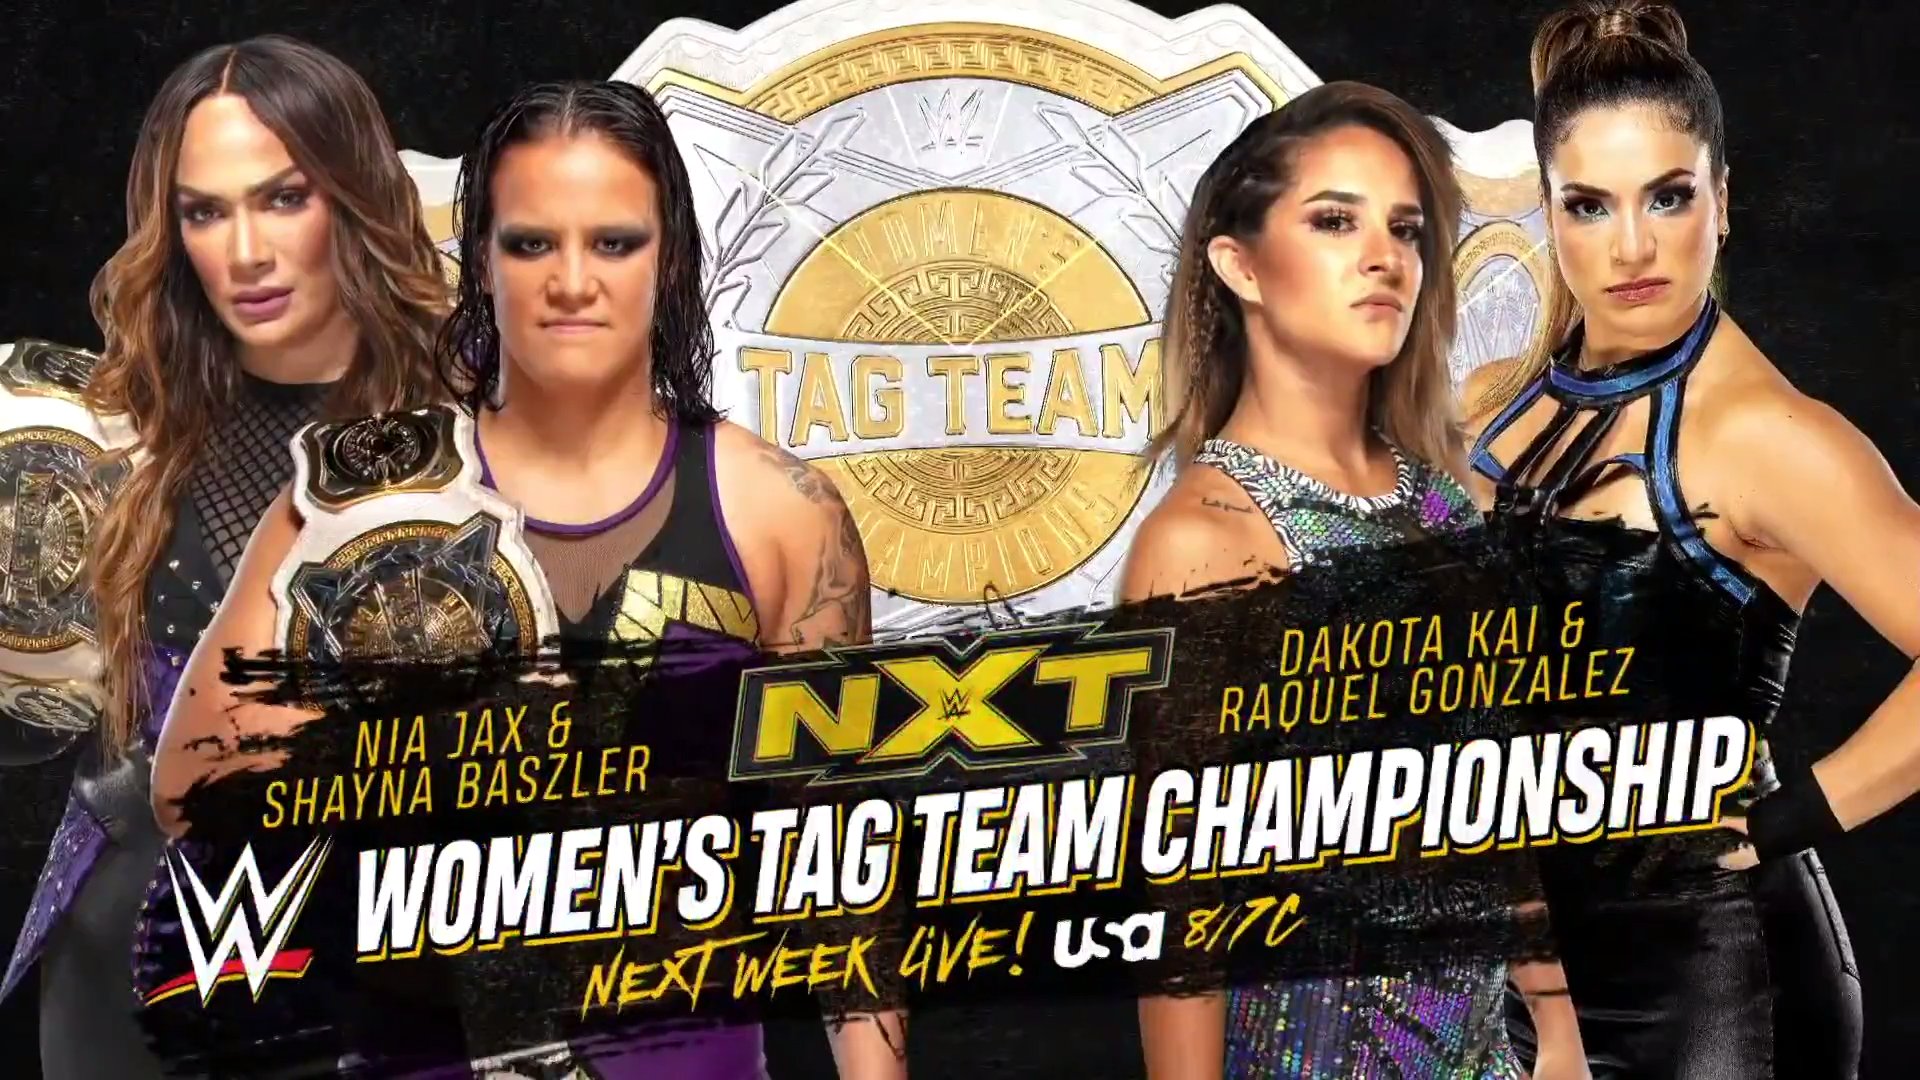 Next week, Shayna Baszler & Nia Jax defend their Women’s Tag Team Champ...